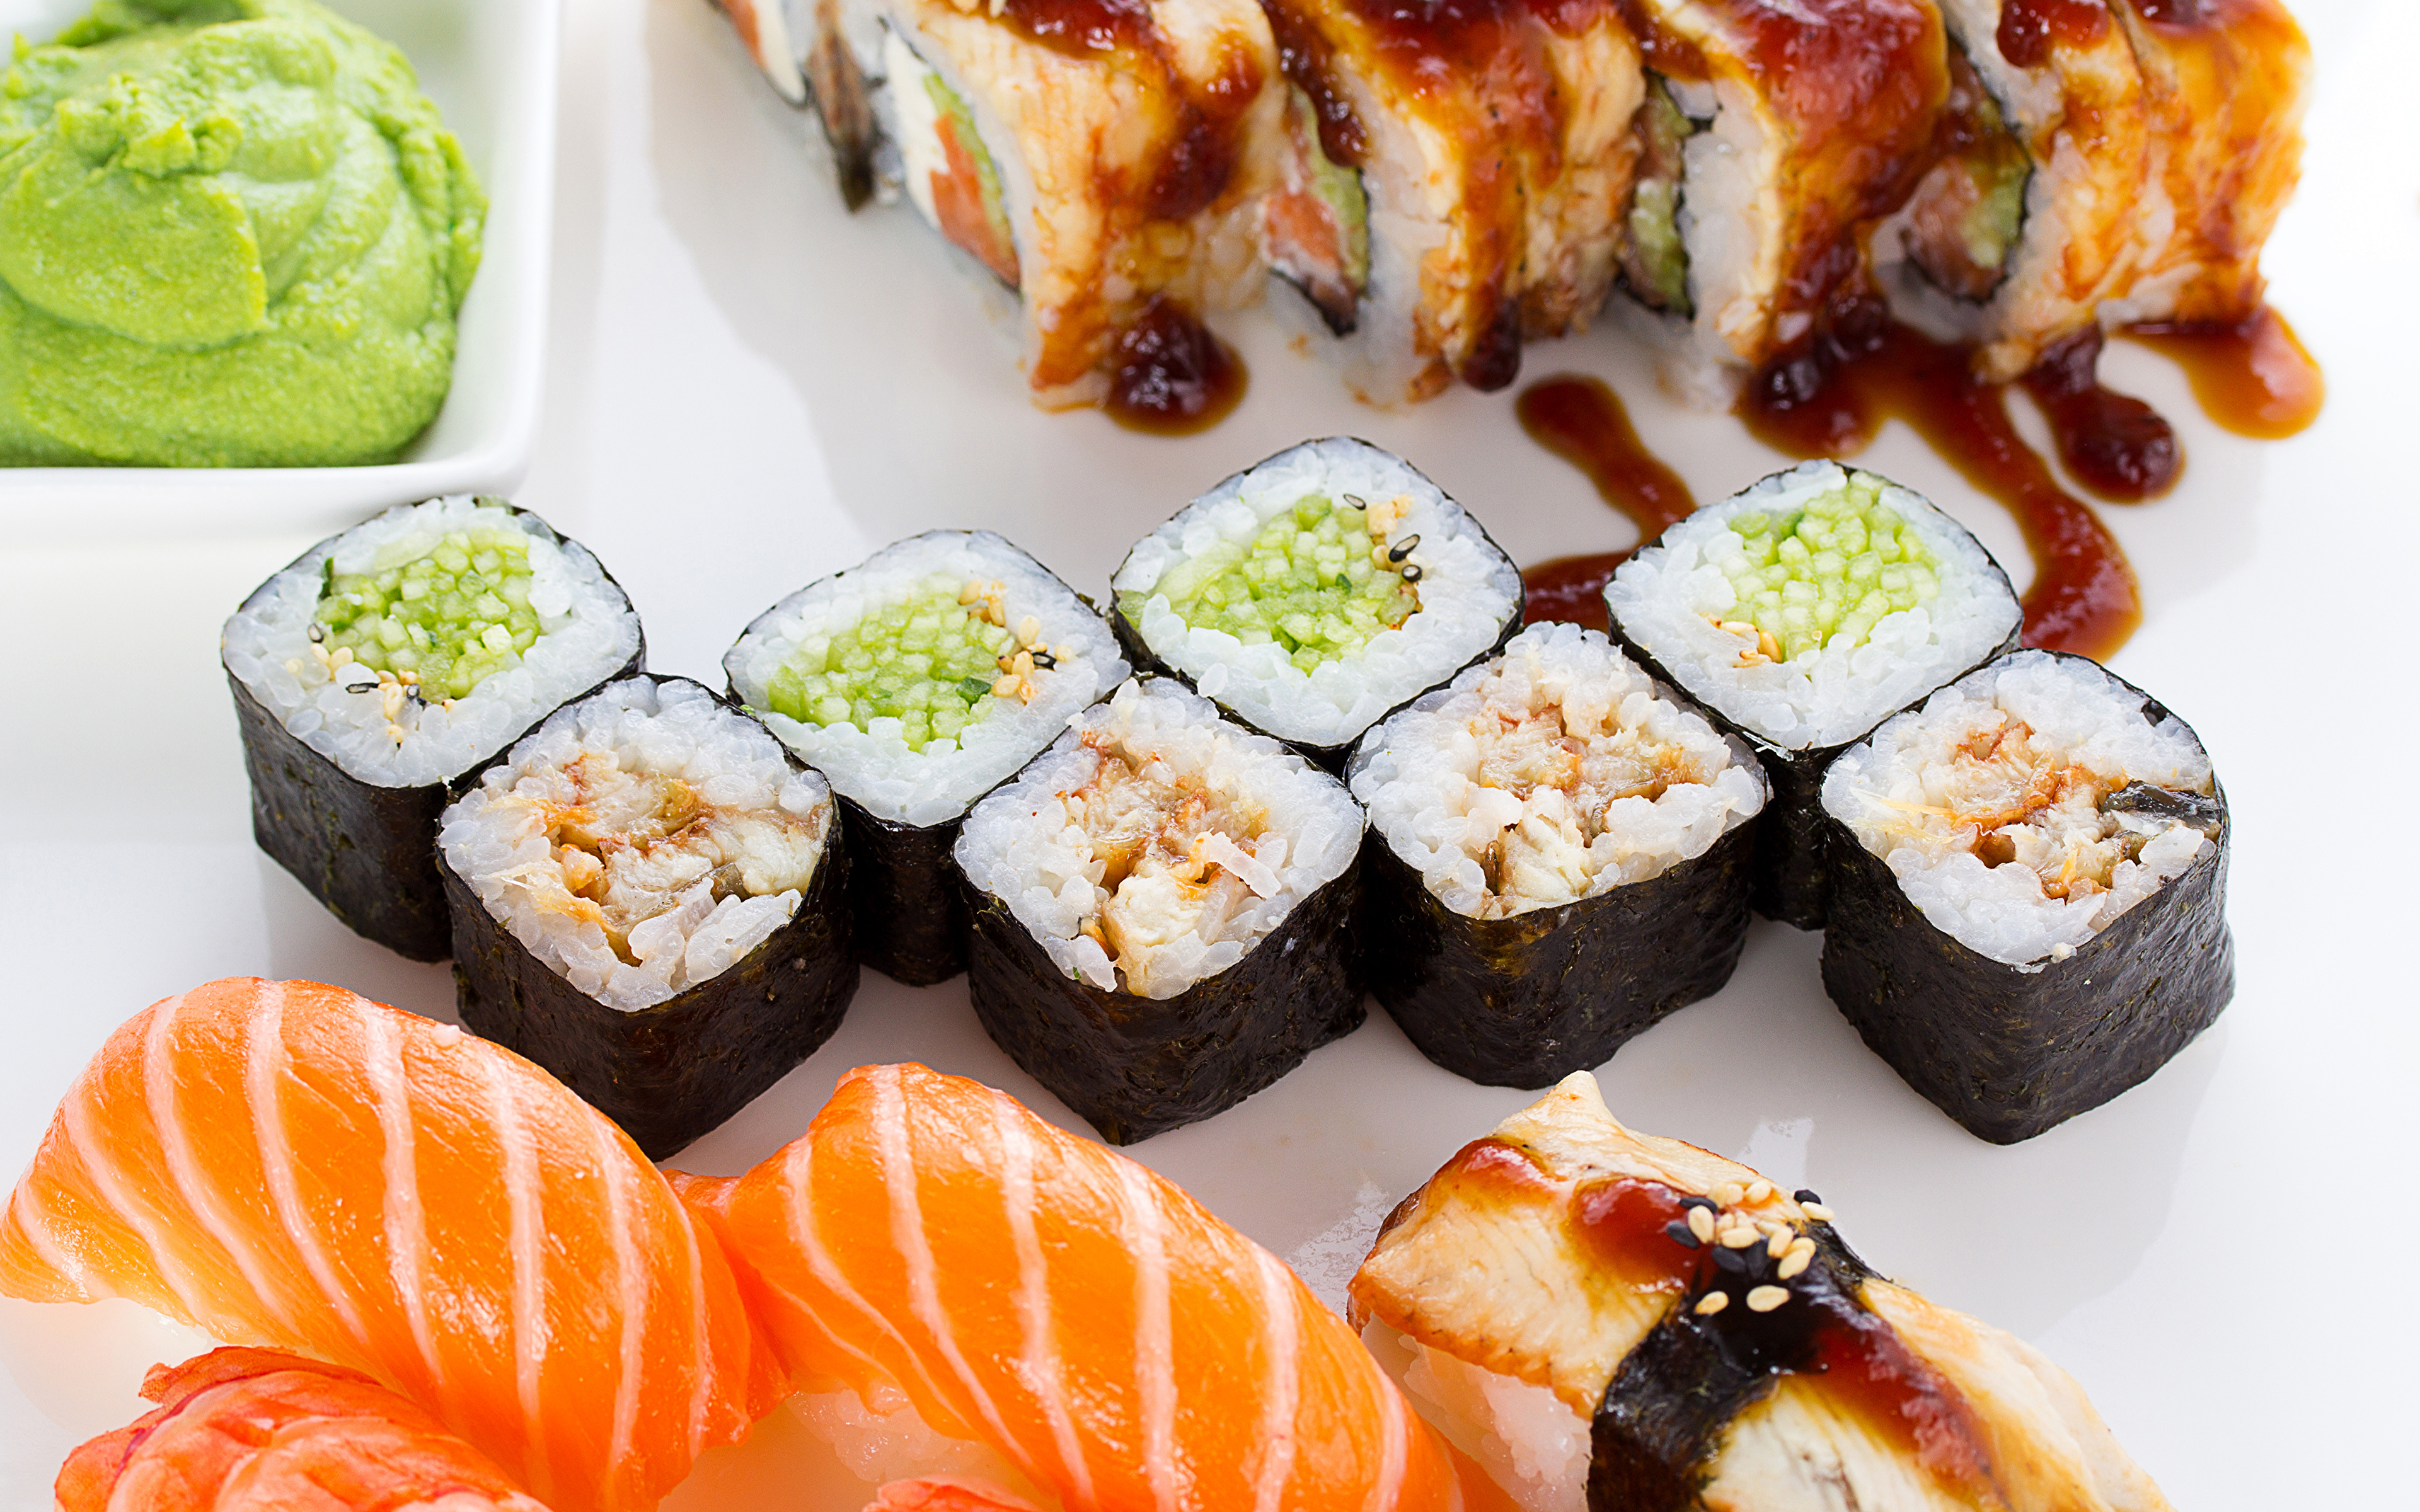 3840x2400 Marisco Sushi Peces - Alimentos Arroz comida Alimentos